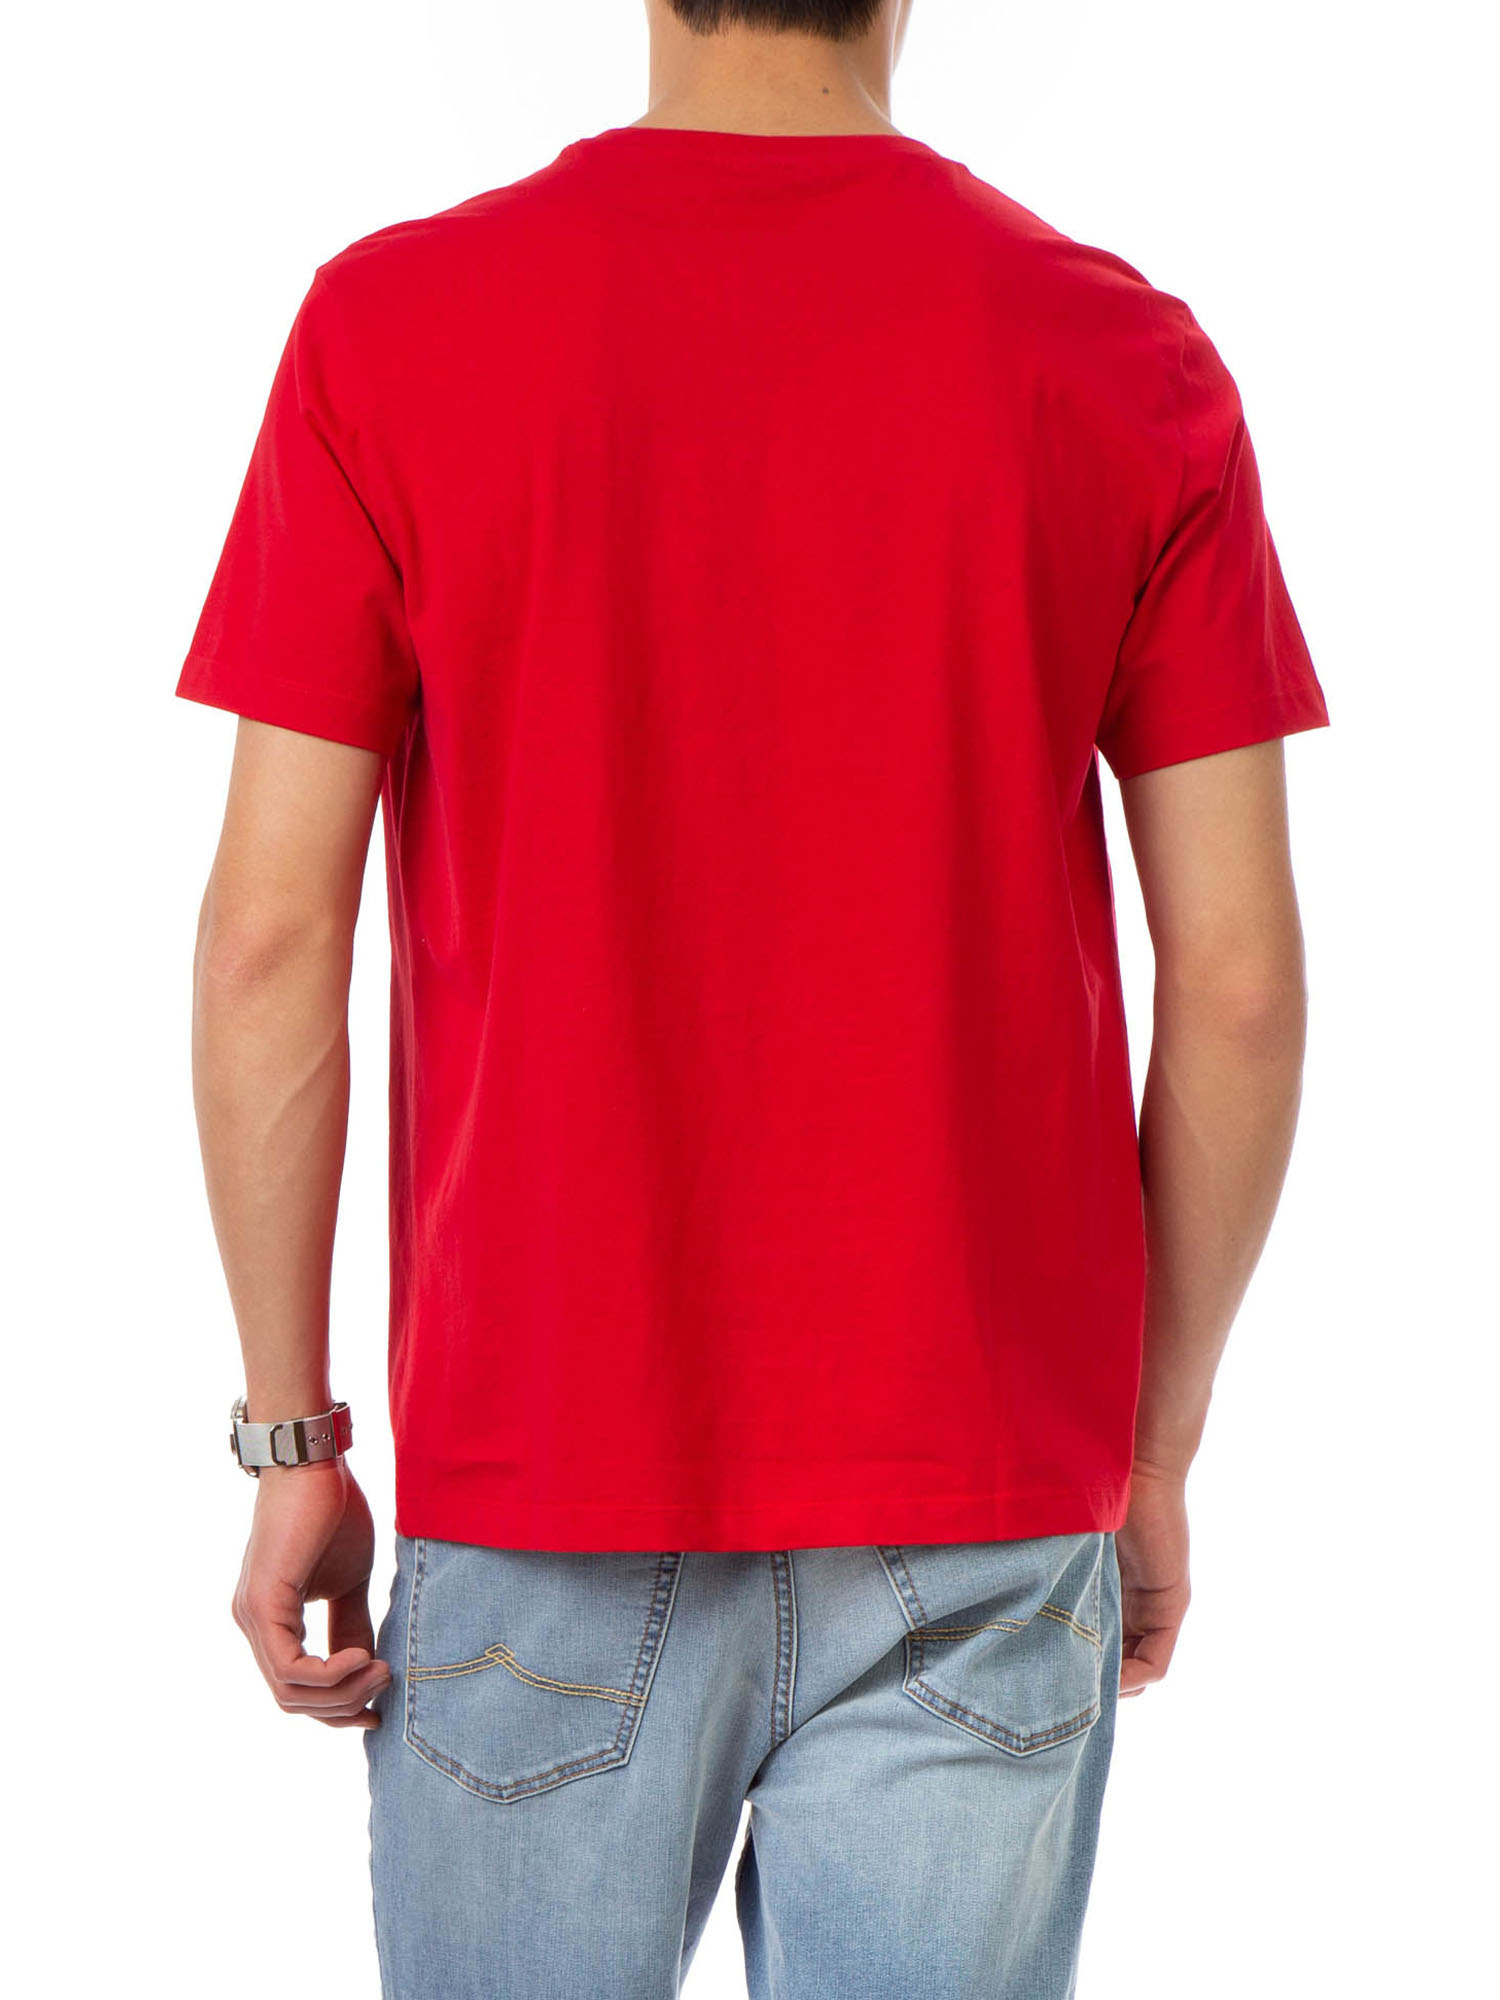 U.S. Polo Assn. Men's Short Sleeve Printed T-Shirt - image 3 of 5